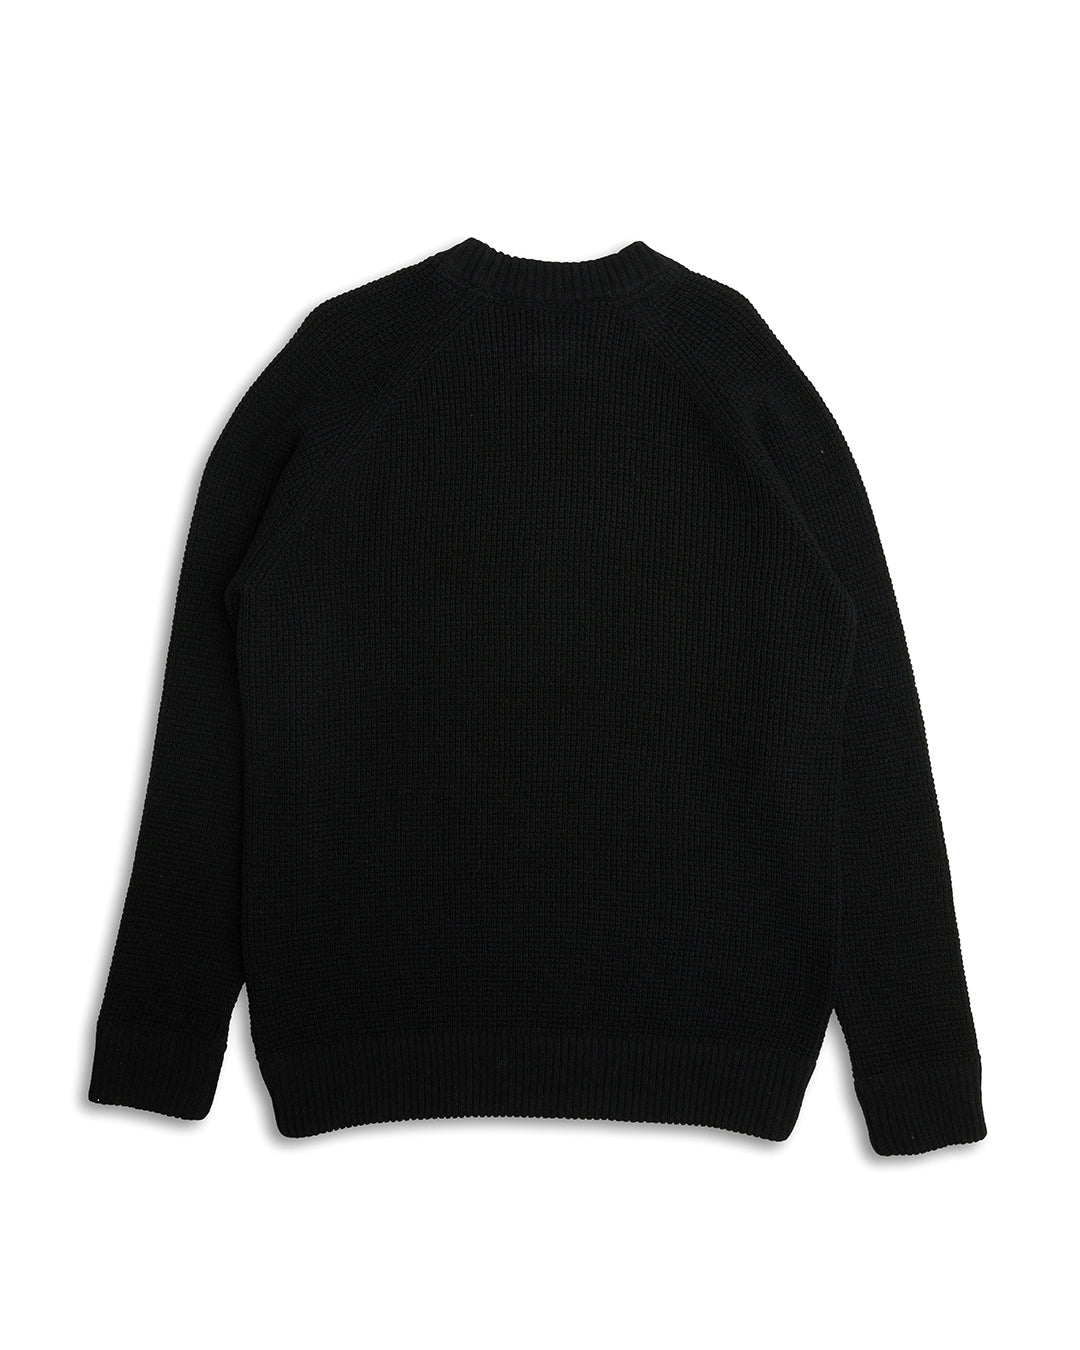 A-Frame Sweater